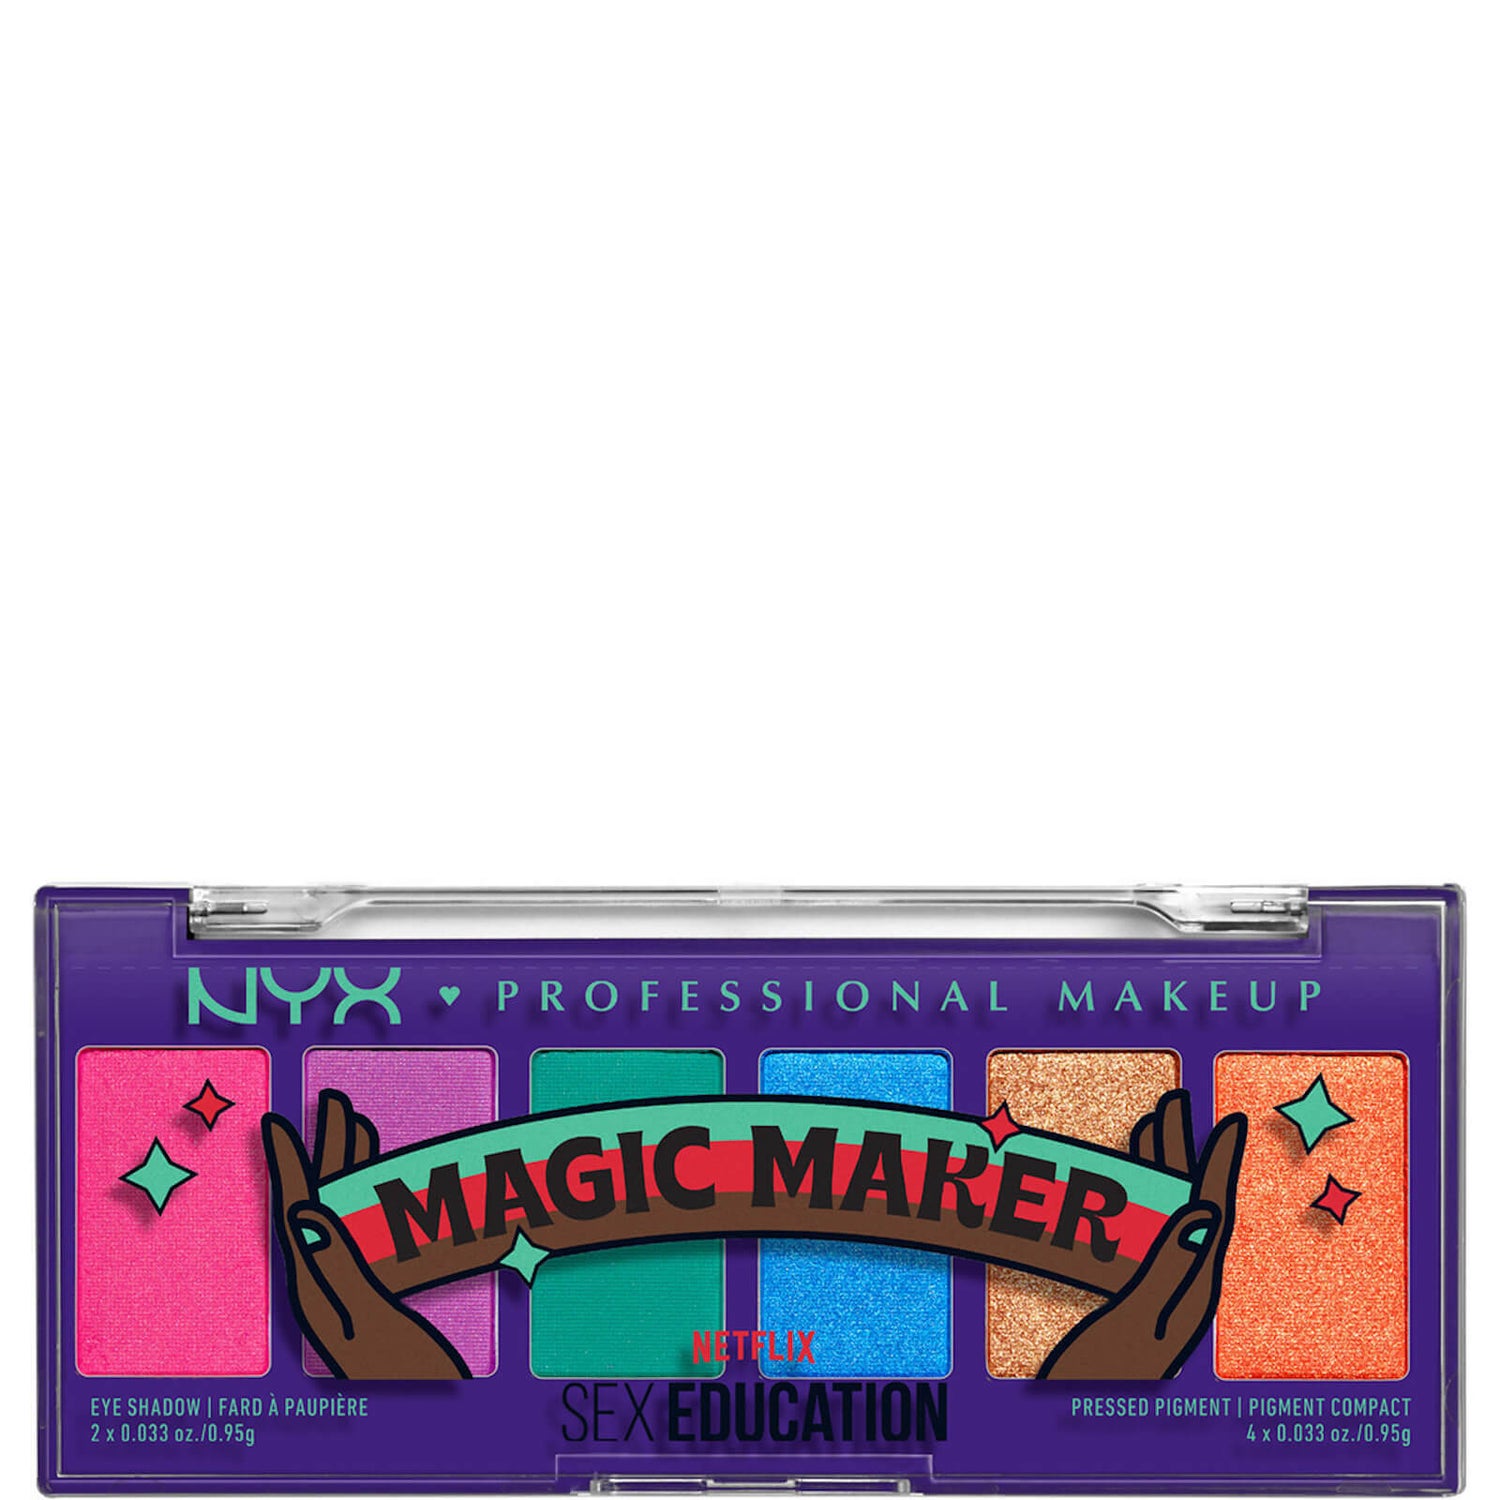 NYX Professional Makeup x Netflix's Sex Education Limited Edition 'Magic Maker' Palette Shadow Palette